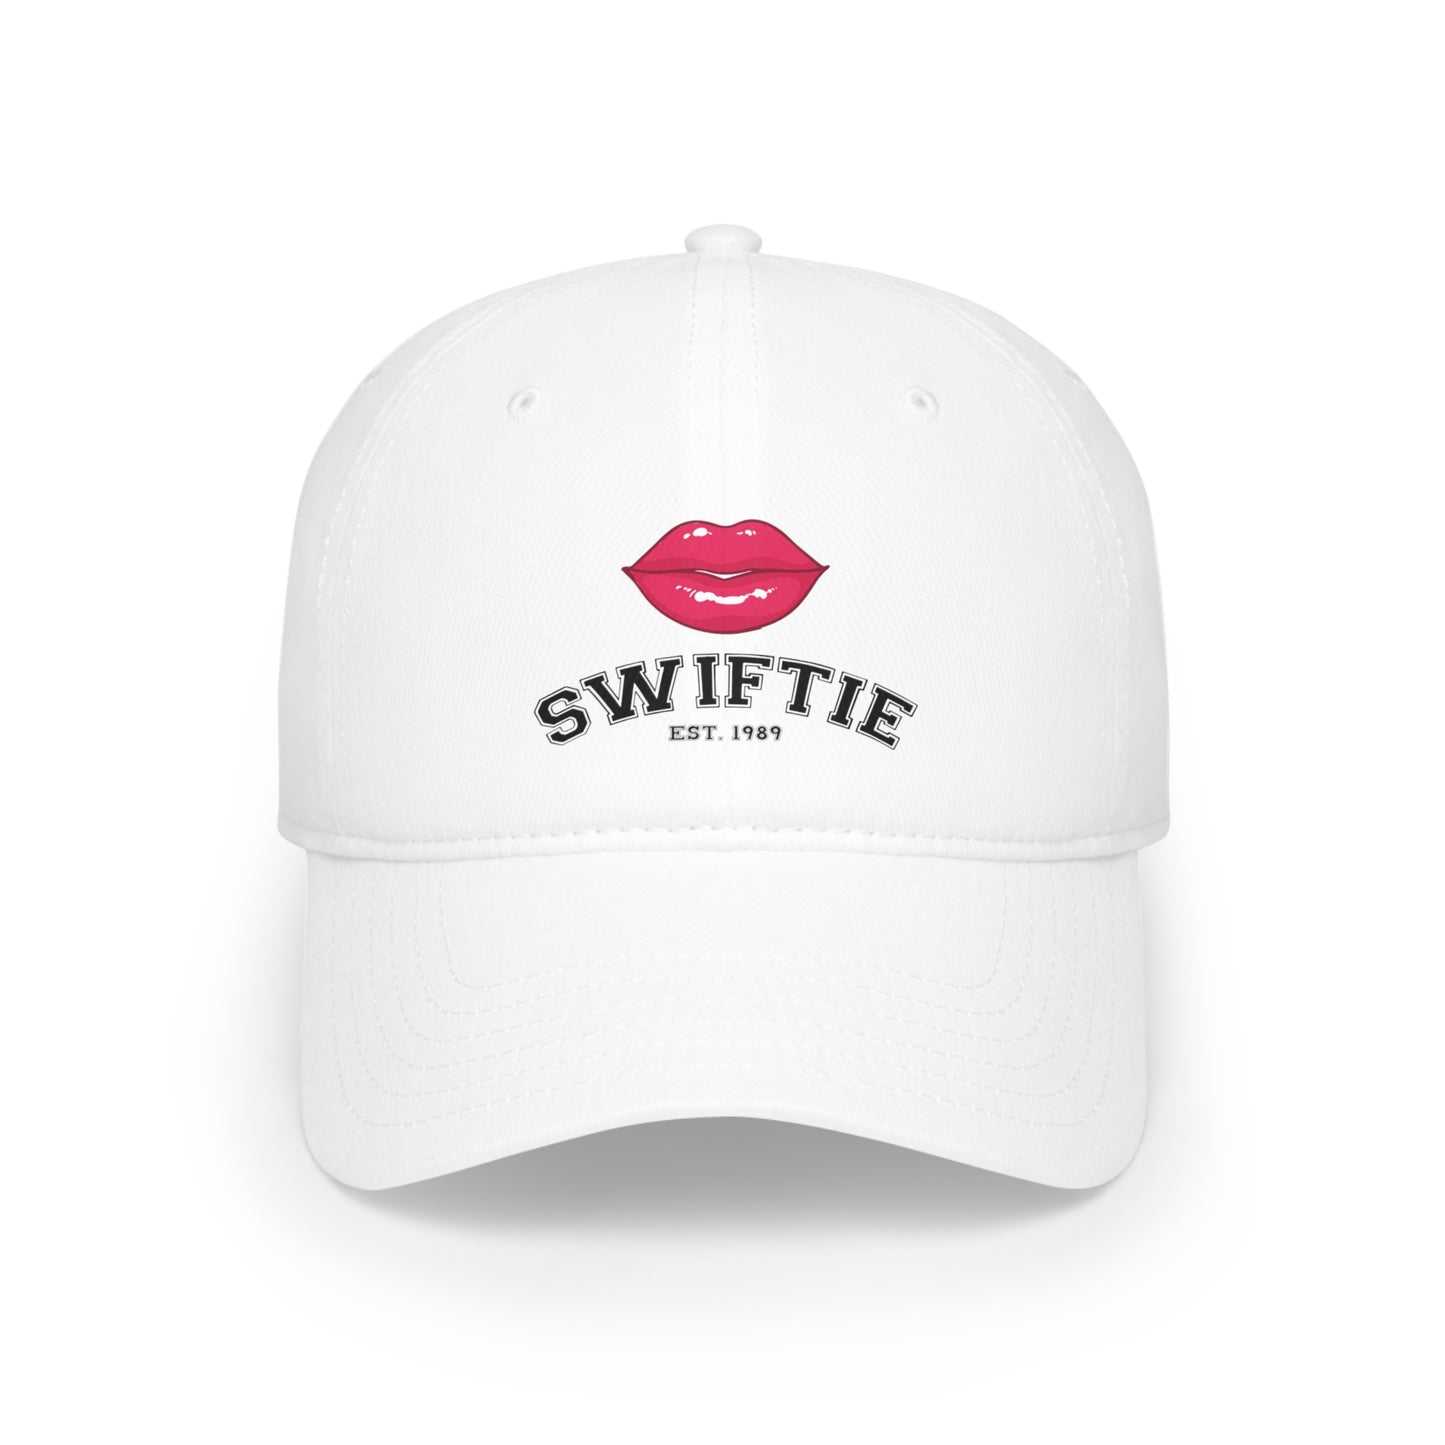 Swiftie Red Lips Baseball Cap